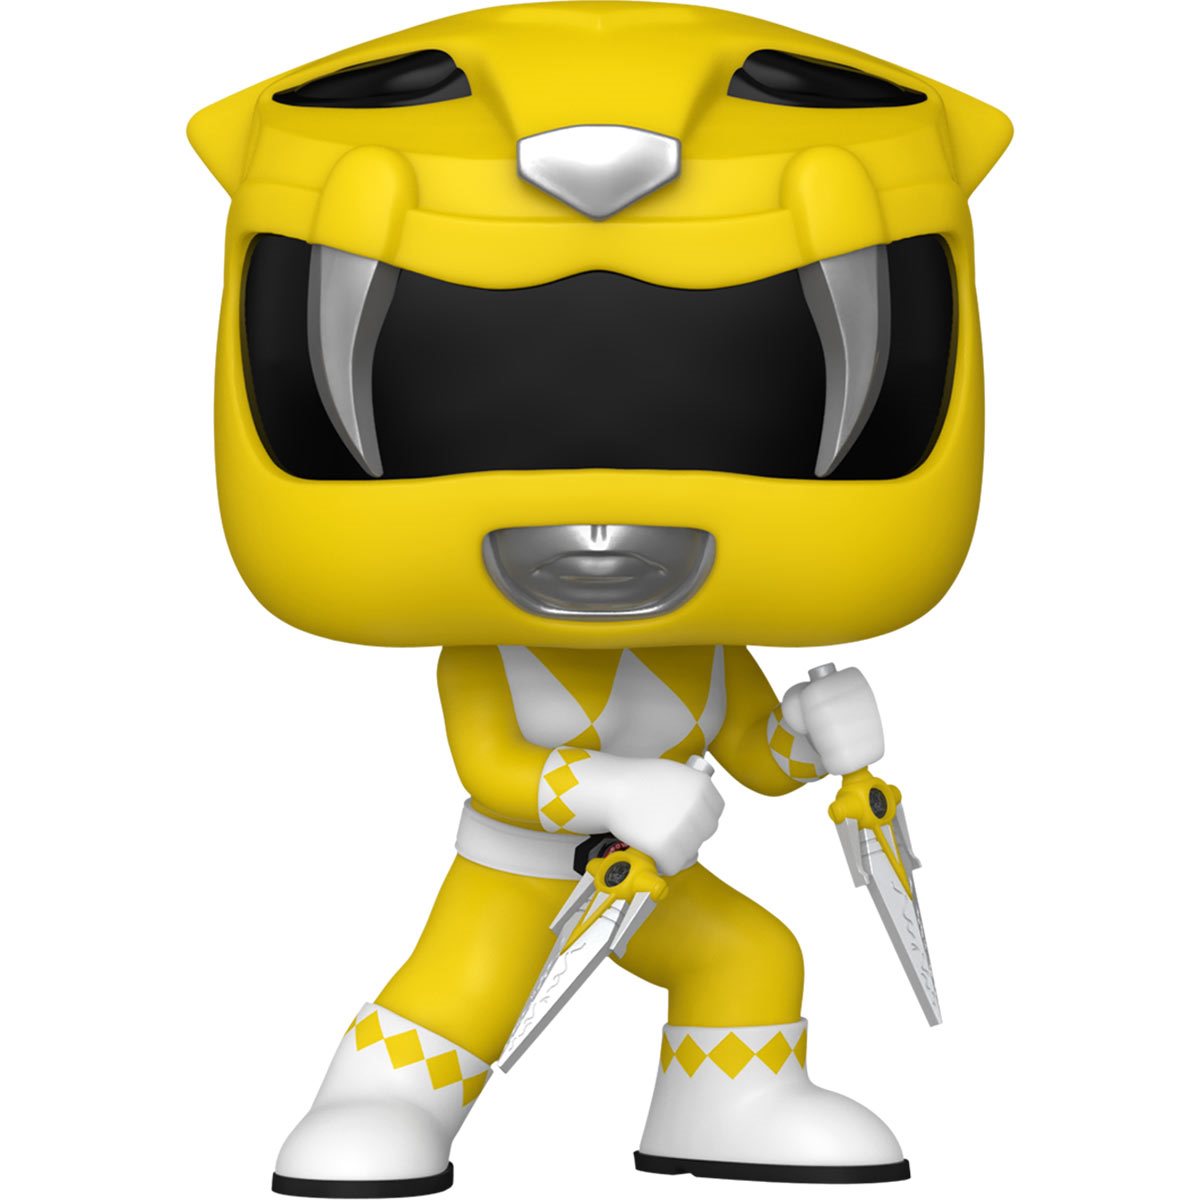 FUNKO POP! TELEVISION: Mighty Morphin Power Rangers 30th - Yellow Ranger 1375